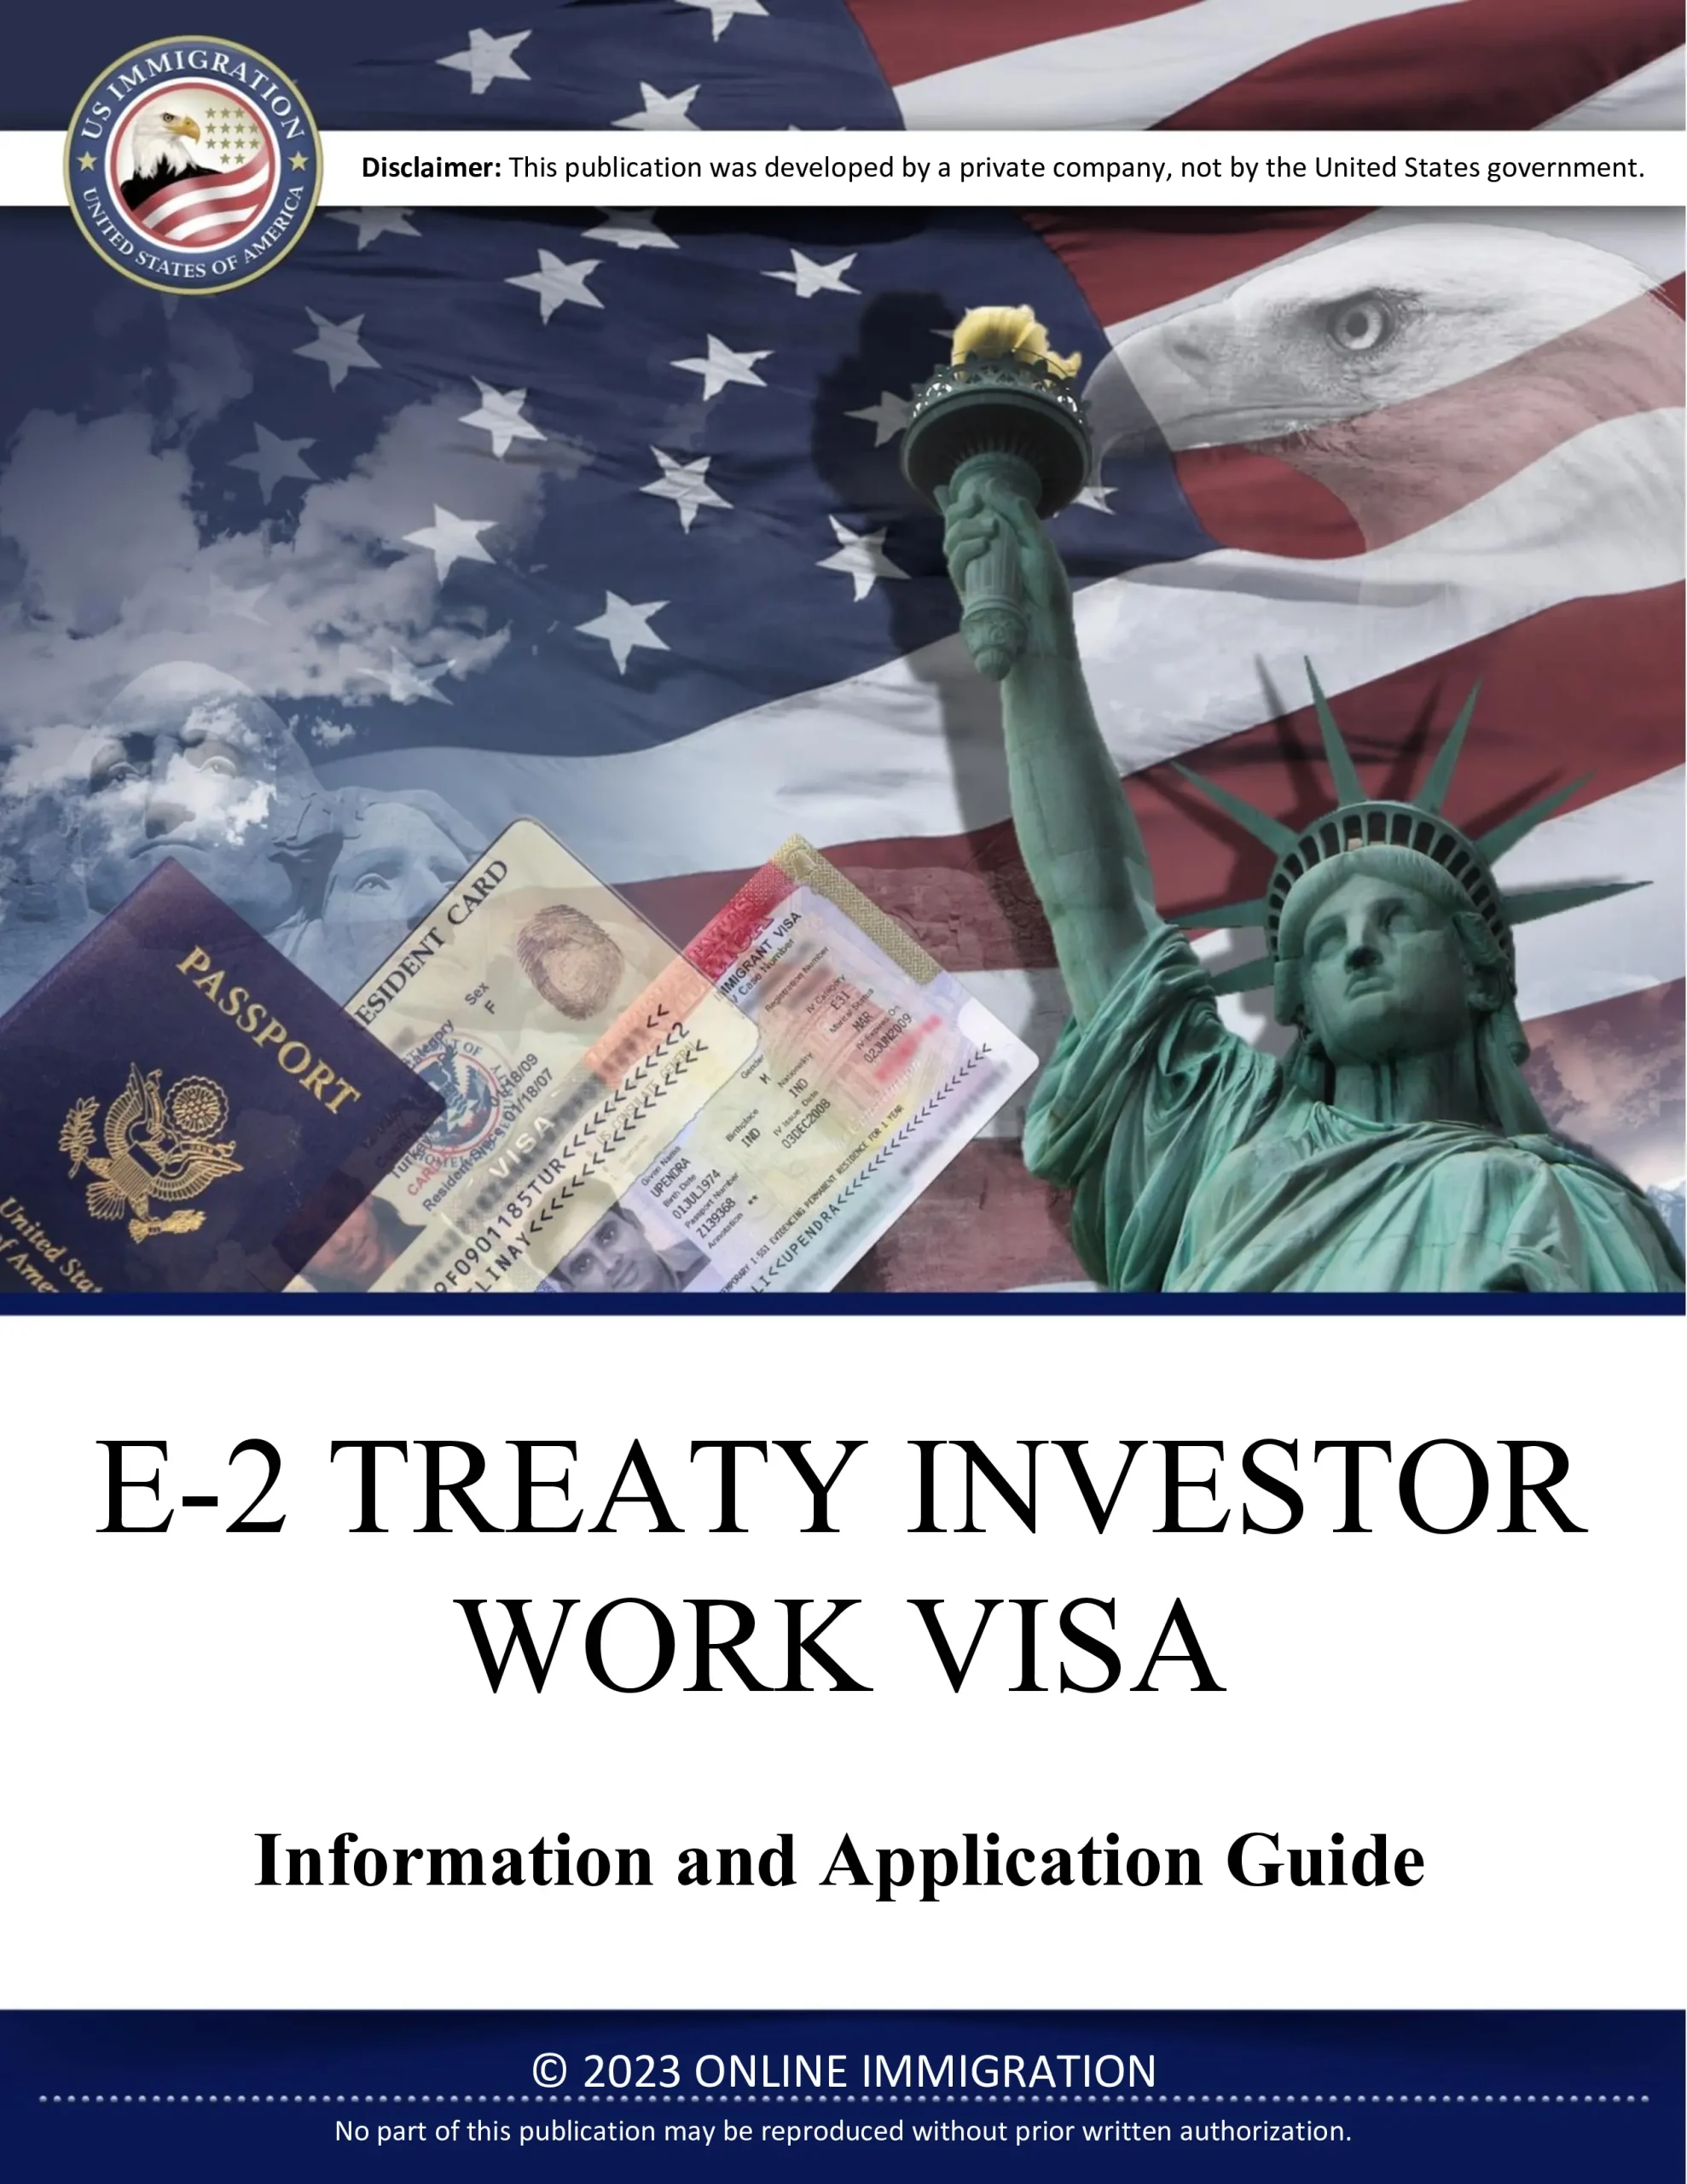 E-2 Treaty Investor Work Visa Application Guide